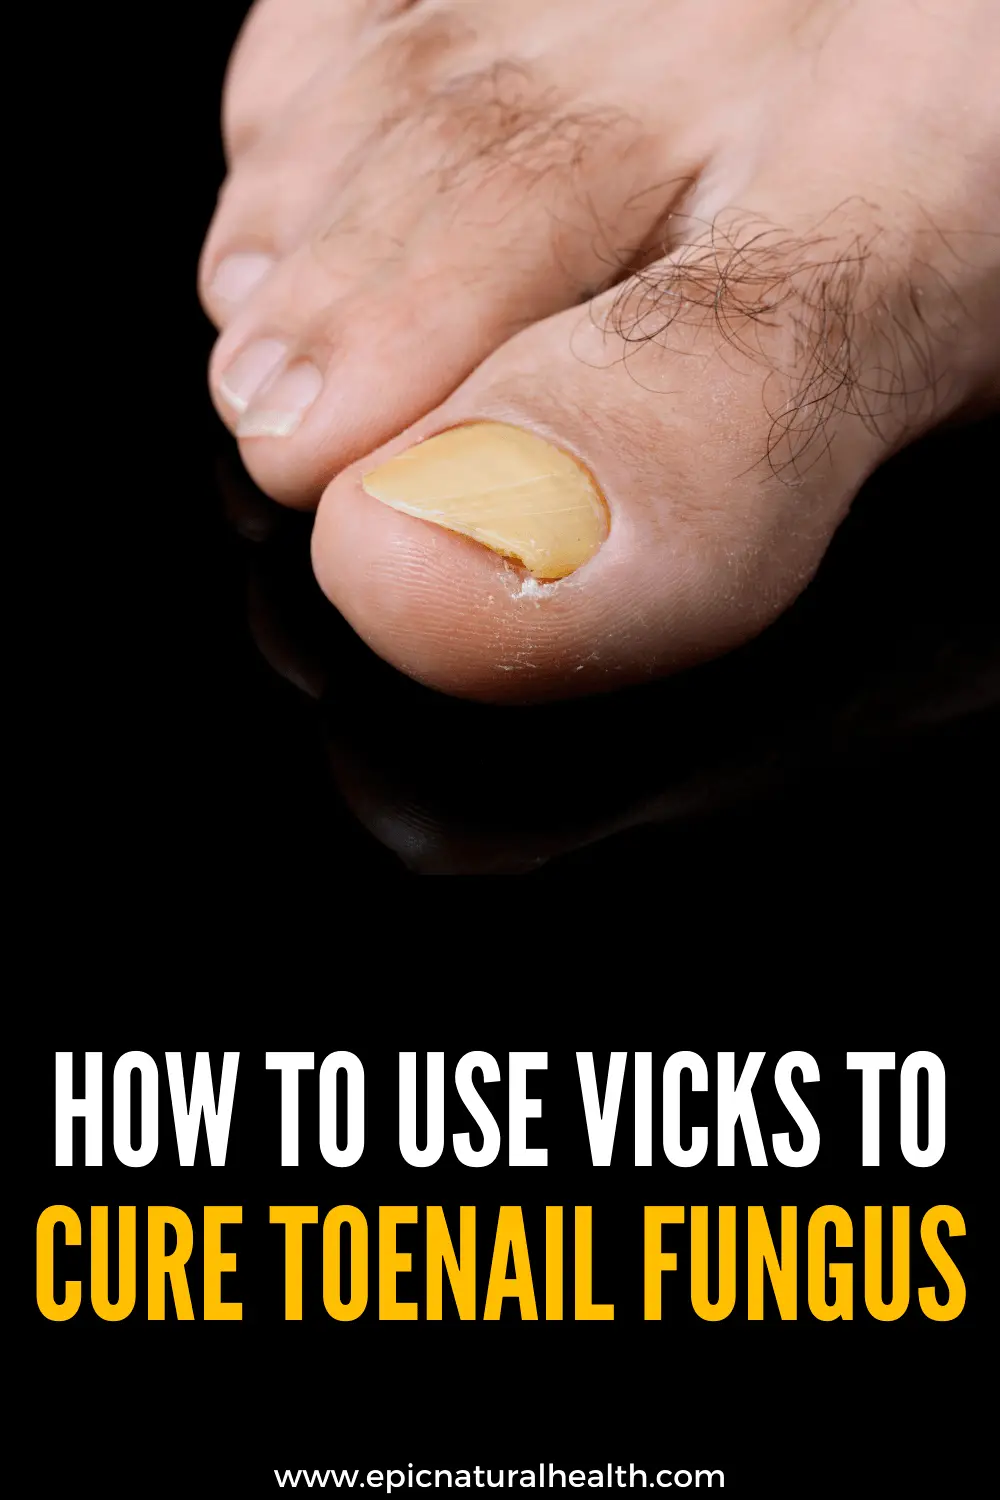 How to use vicks to cure toenail fungus